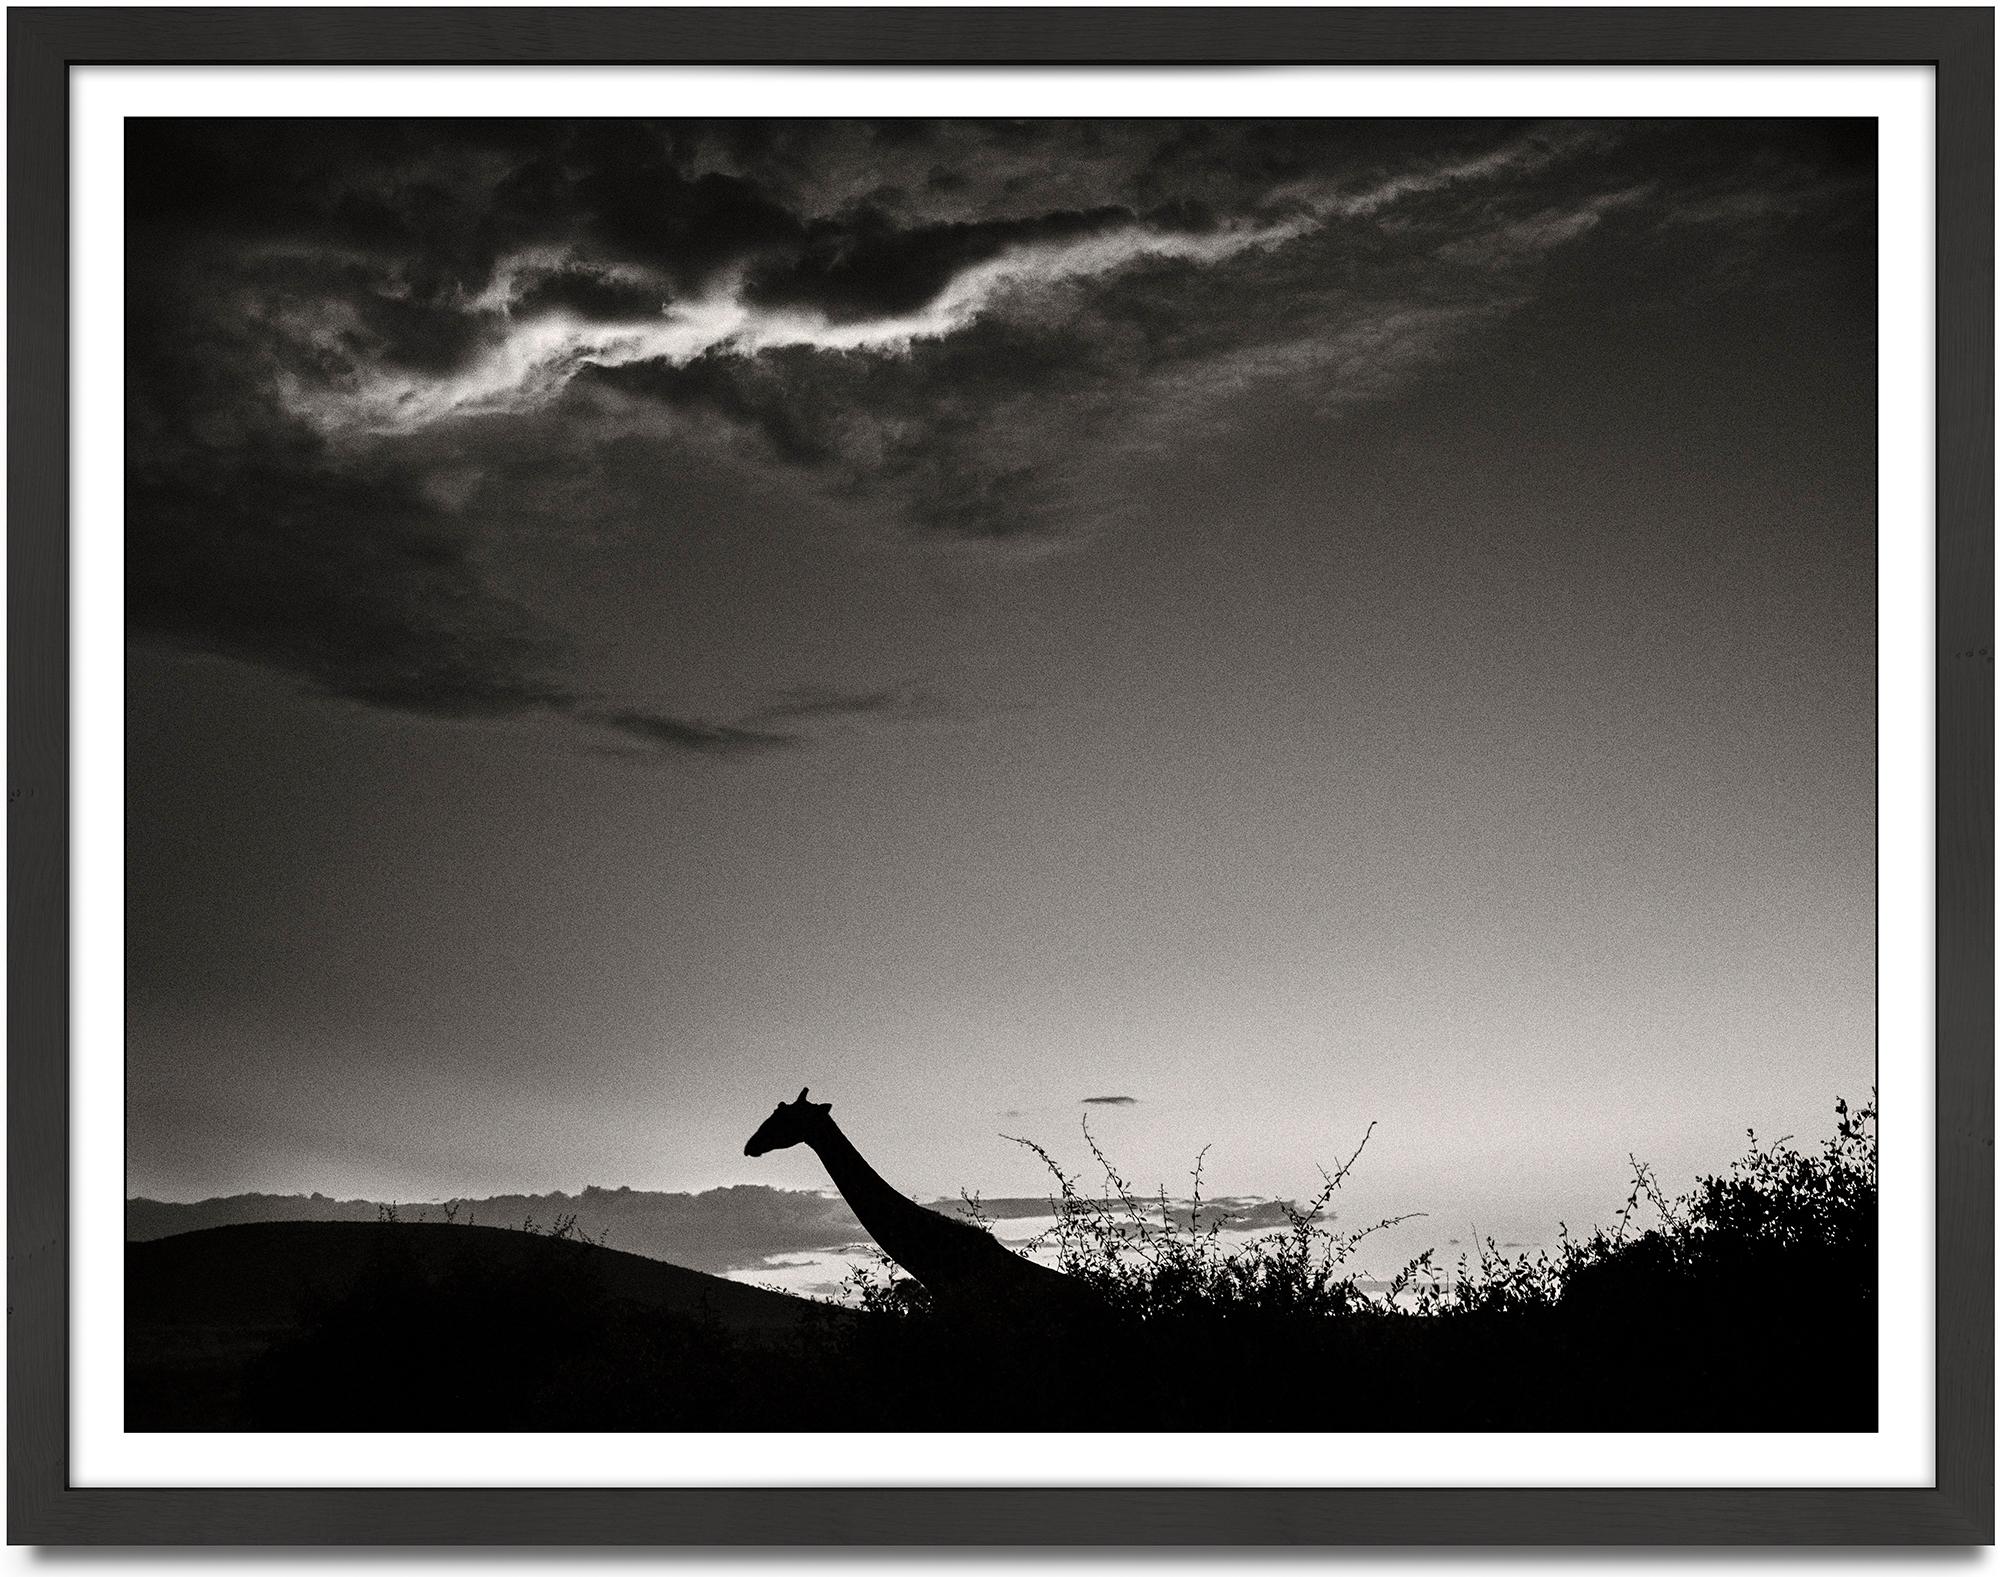 Le chevalier sombre, animal, faune sauvage, photographie en noir et blanc, girafe - Photograph de Joachim Schmeisser